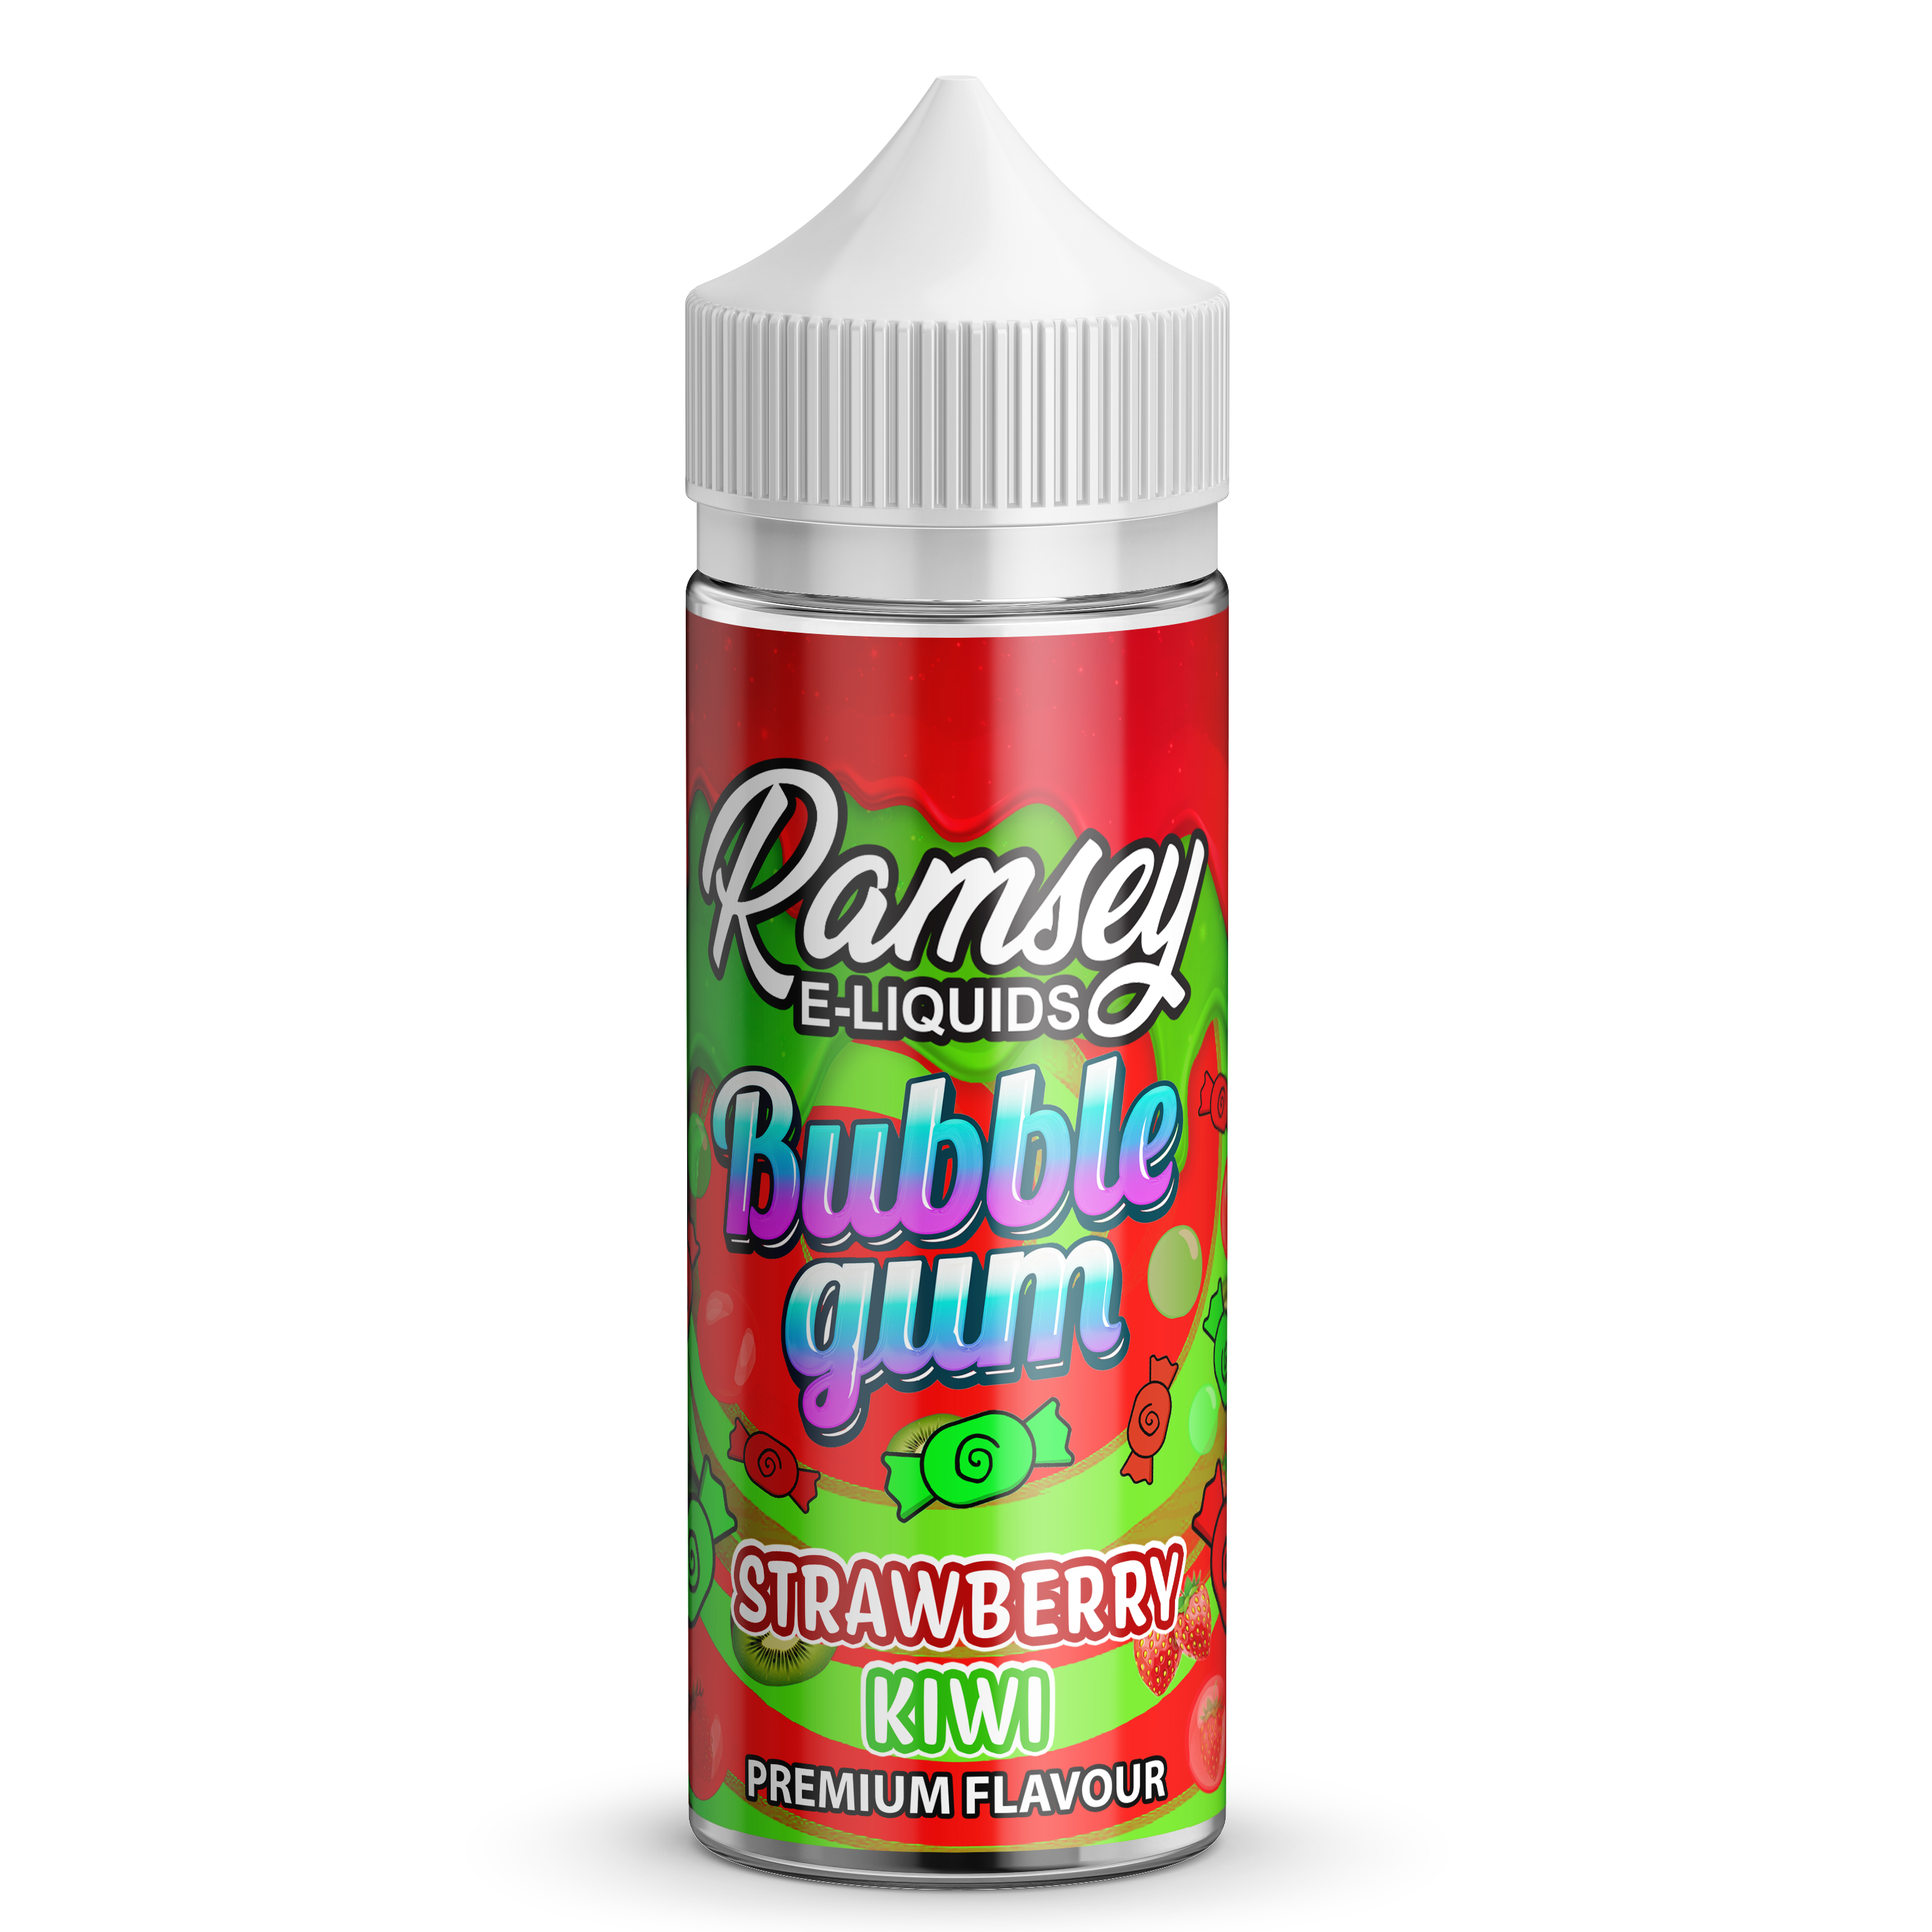 Ramsey E-Liquid Bubblegum Strawberry Kiwi 0mg 100ml Shortfill E-Liquid